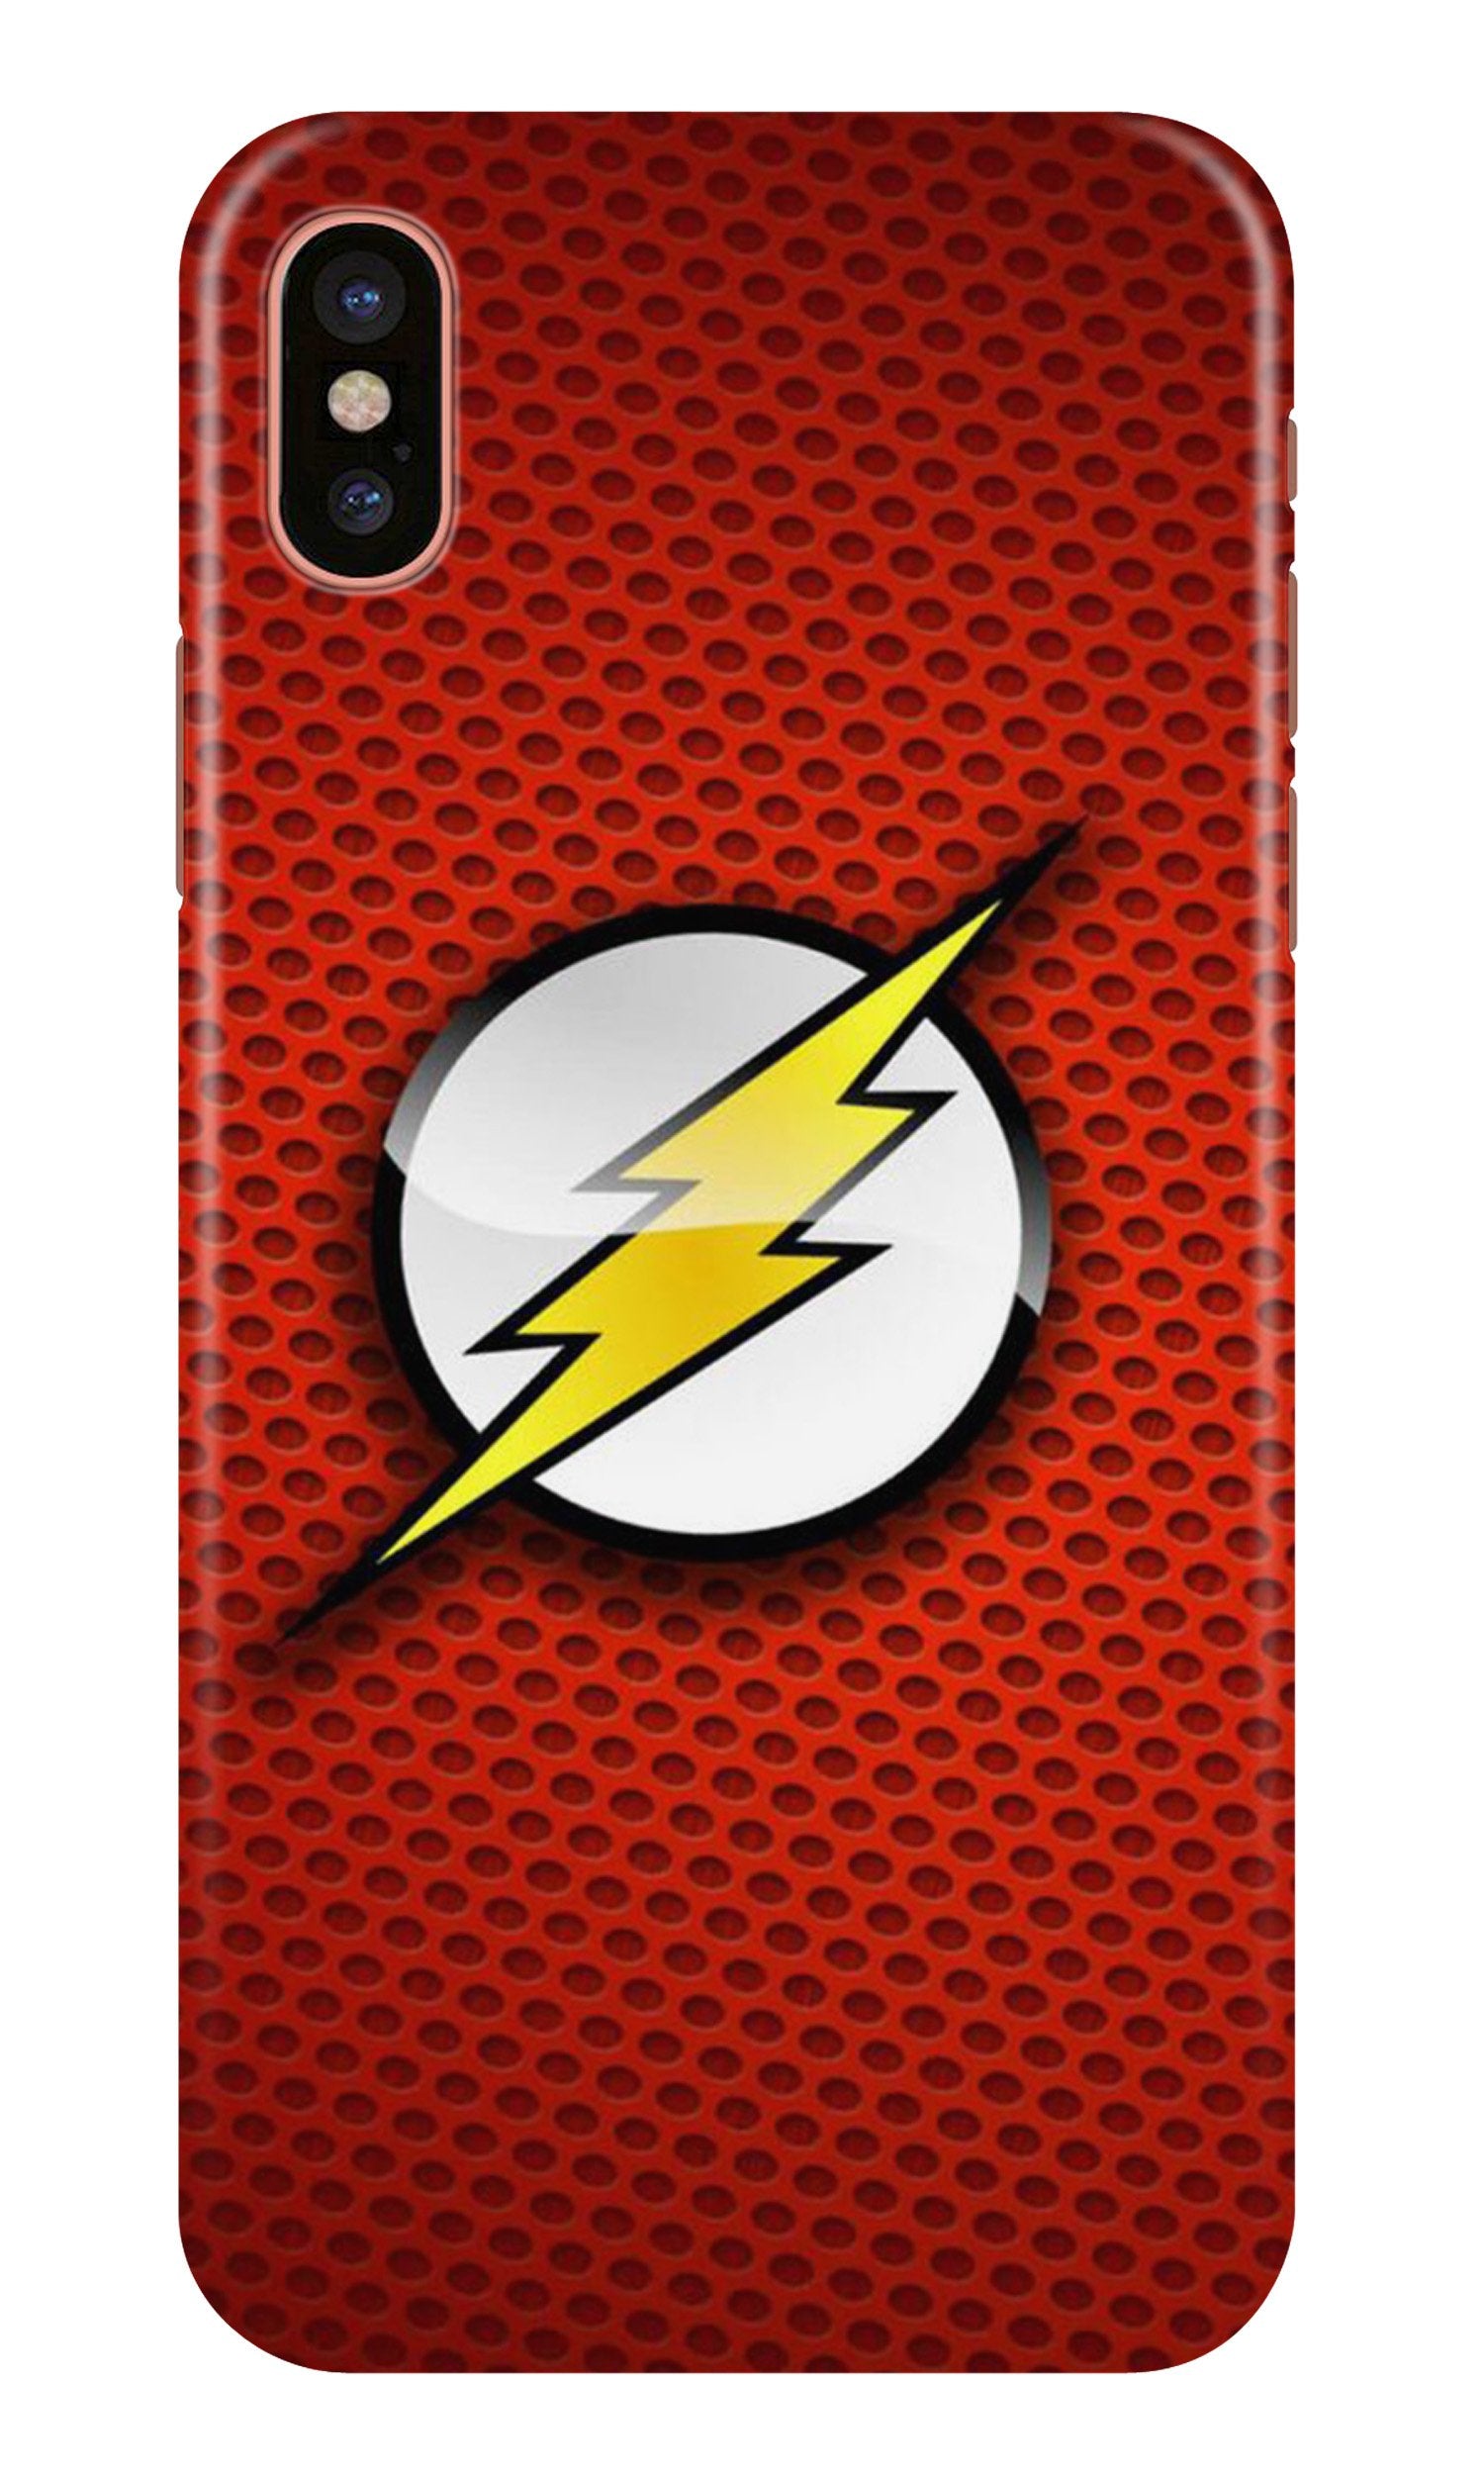 Flash Case for iPhone X (Design No. 252)